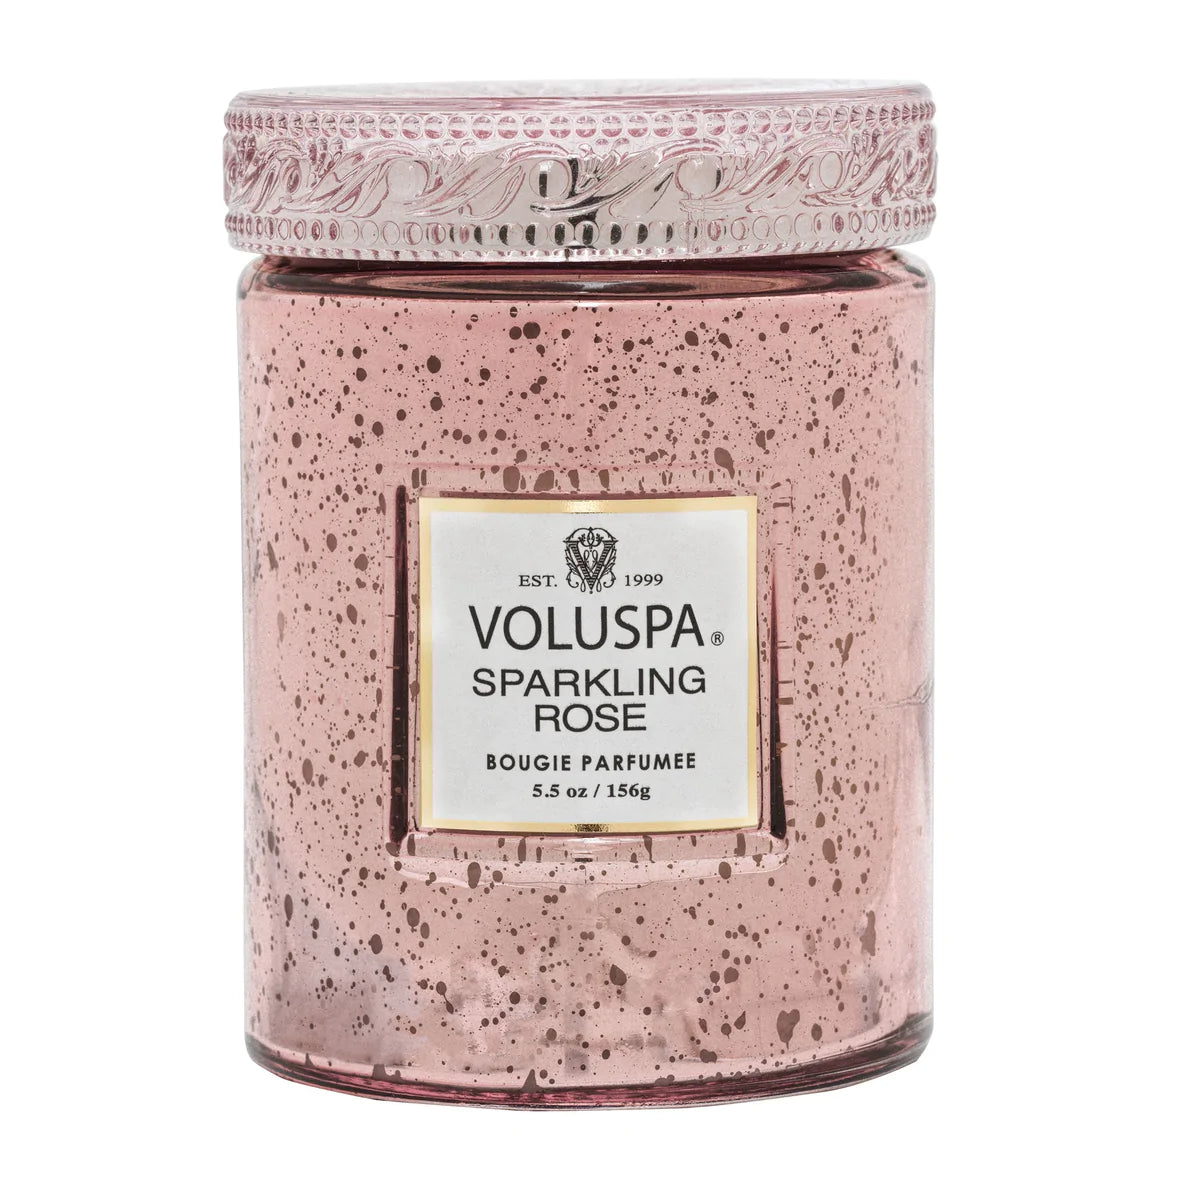 Voluspa - 5.5oz Small Jar Candle - Sparkling Rose